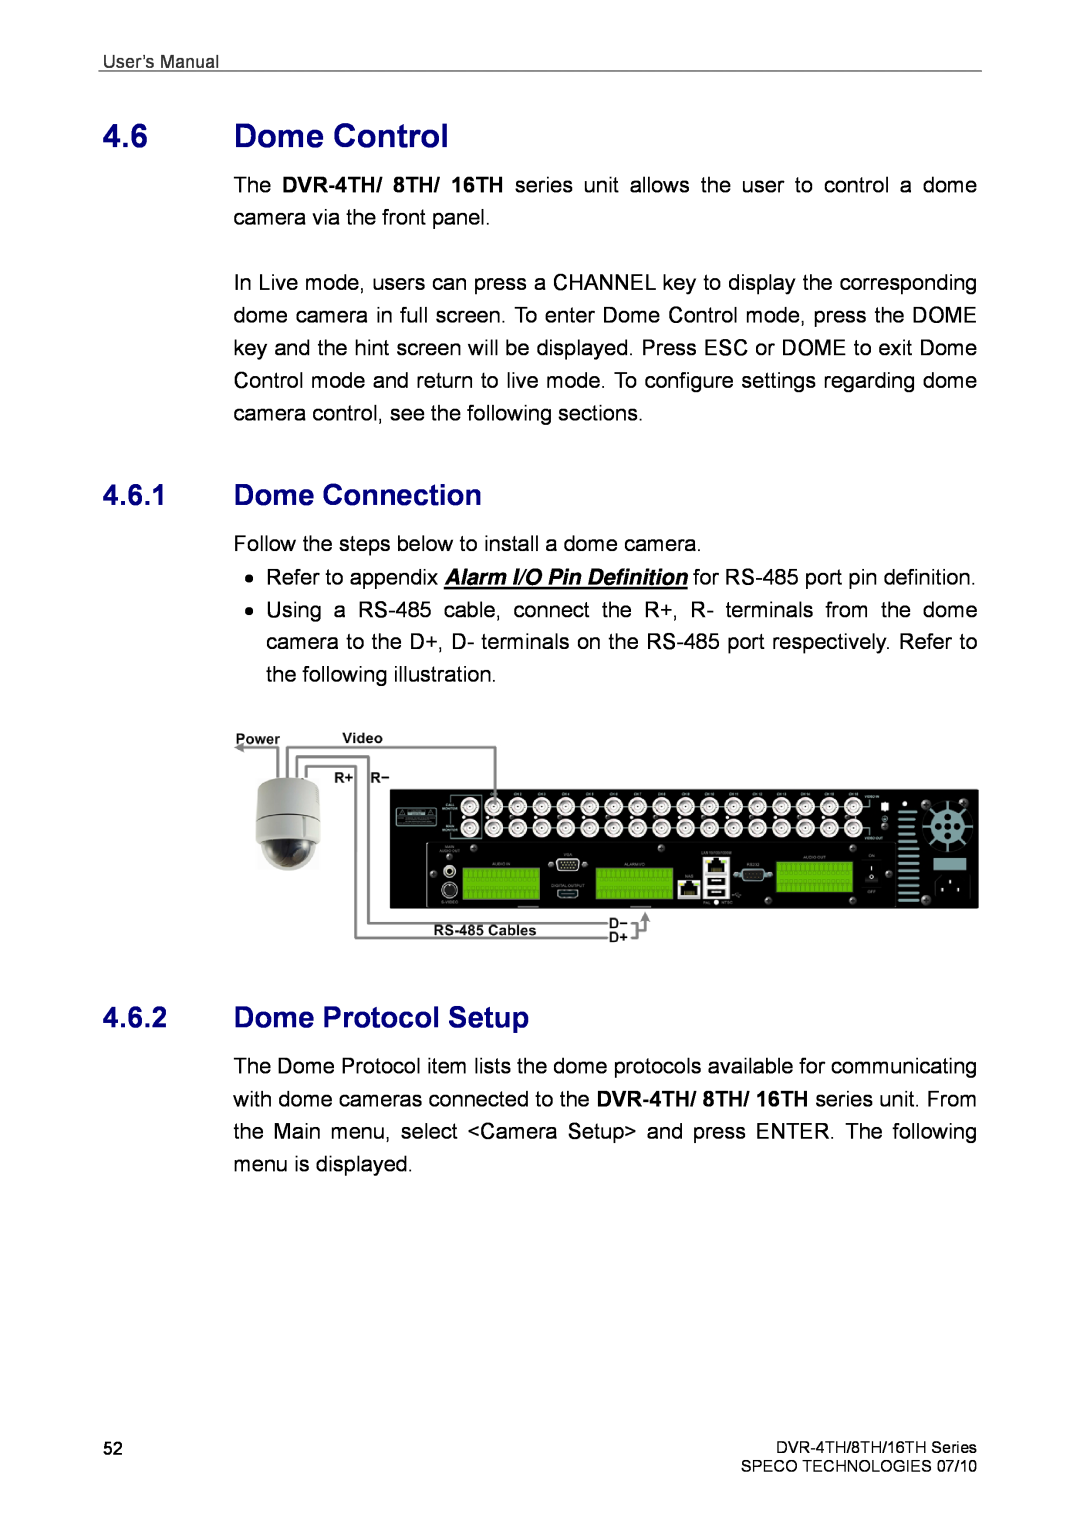 Speco Technologies 16TH, 8TH, 4TH user manual Dome Control, Dome Connection, Dome Protocol Setup 